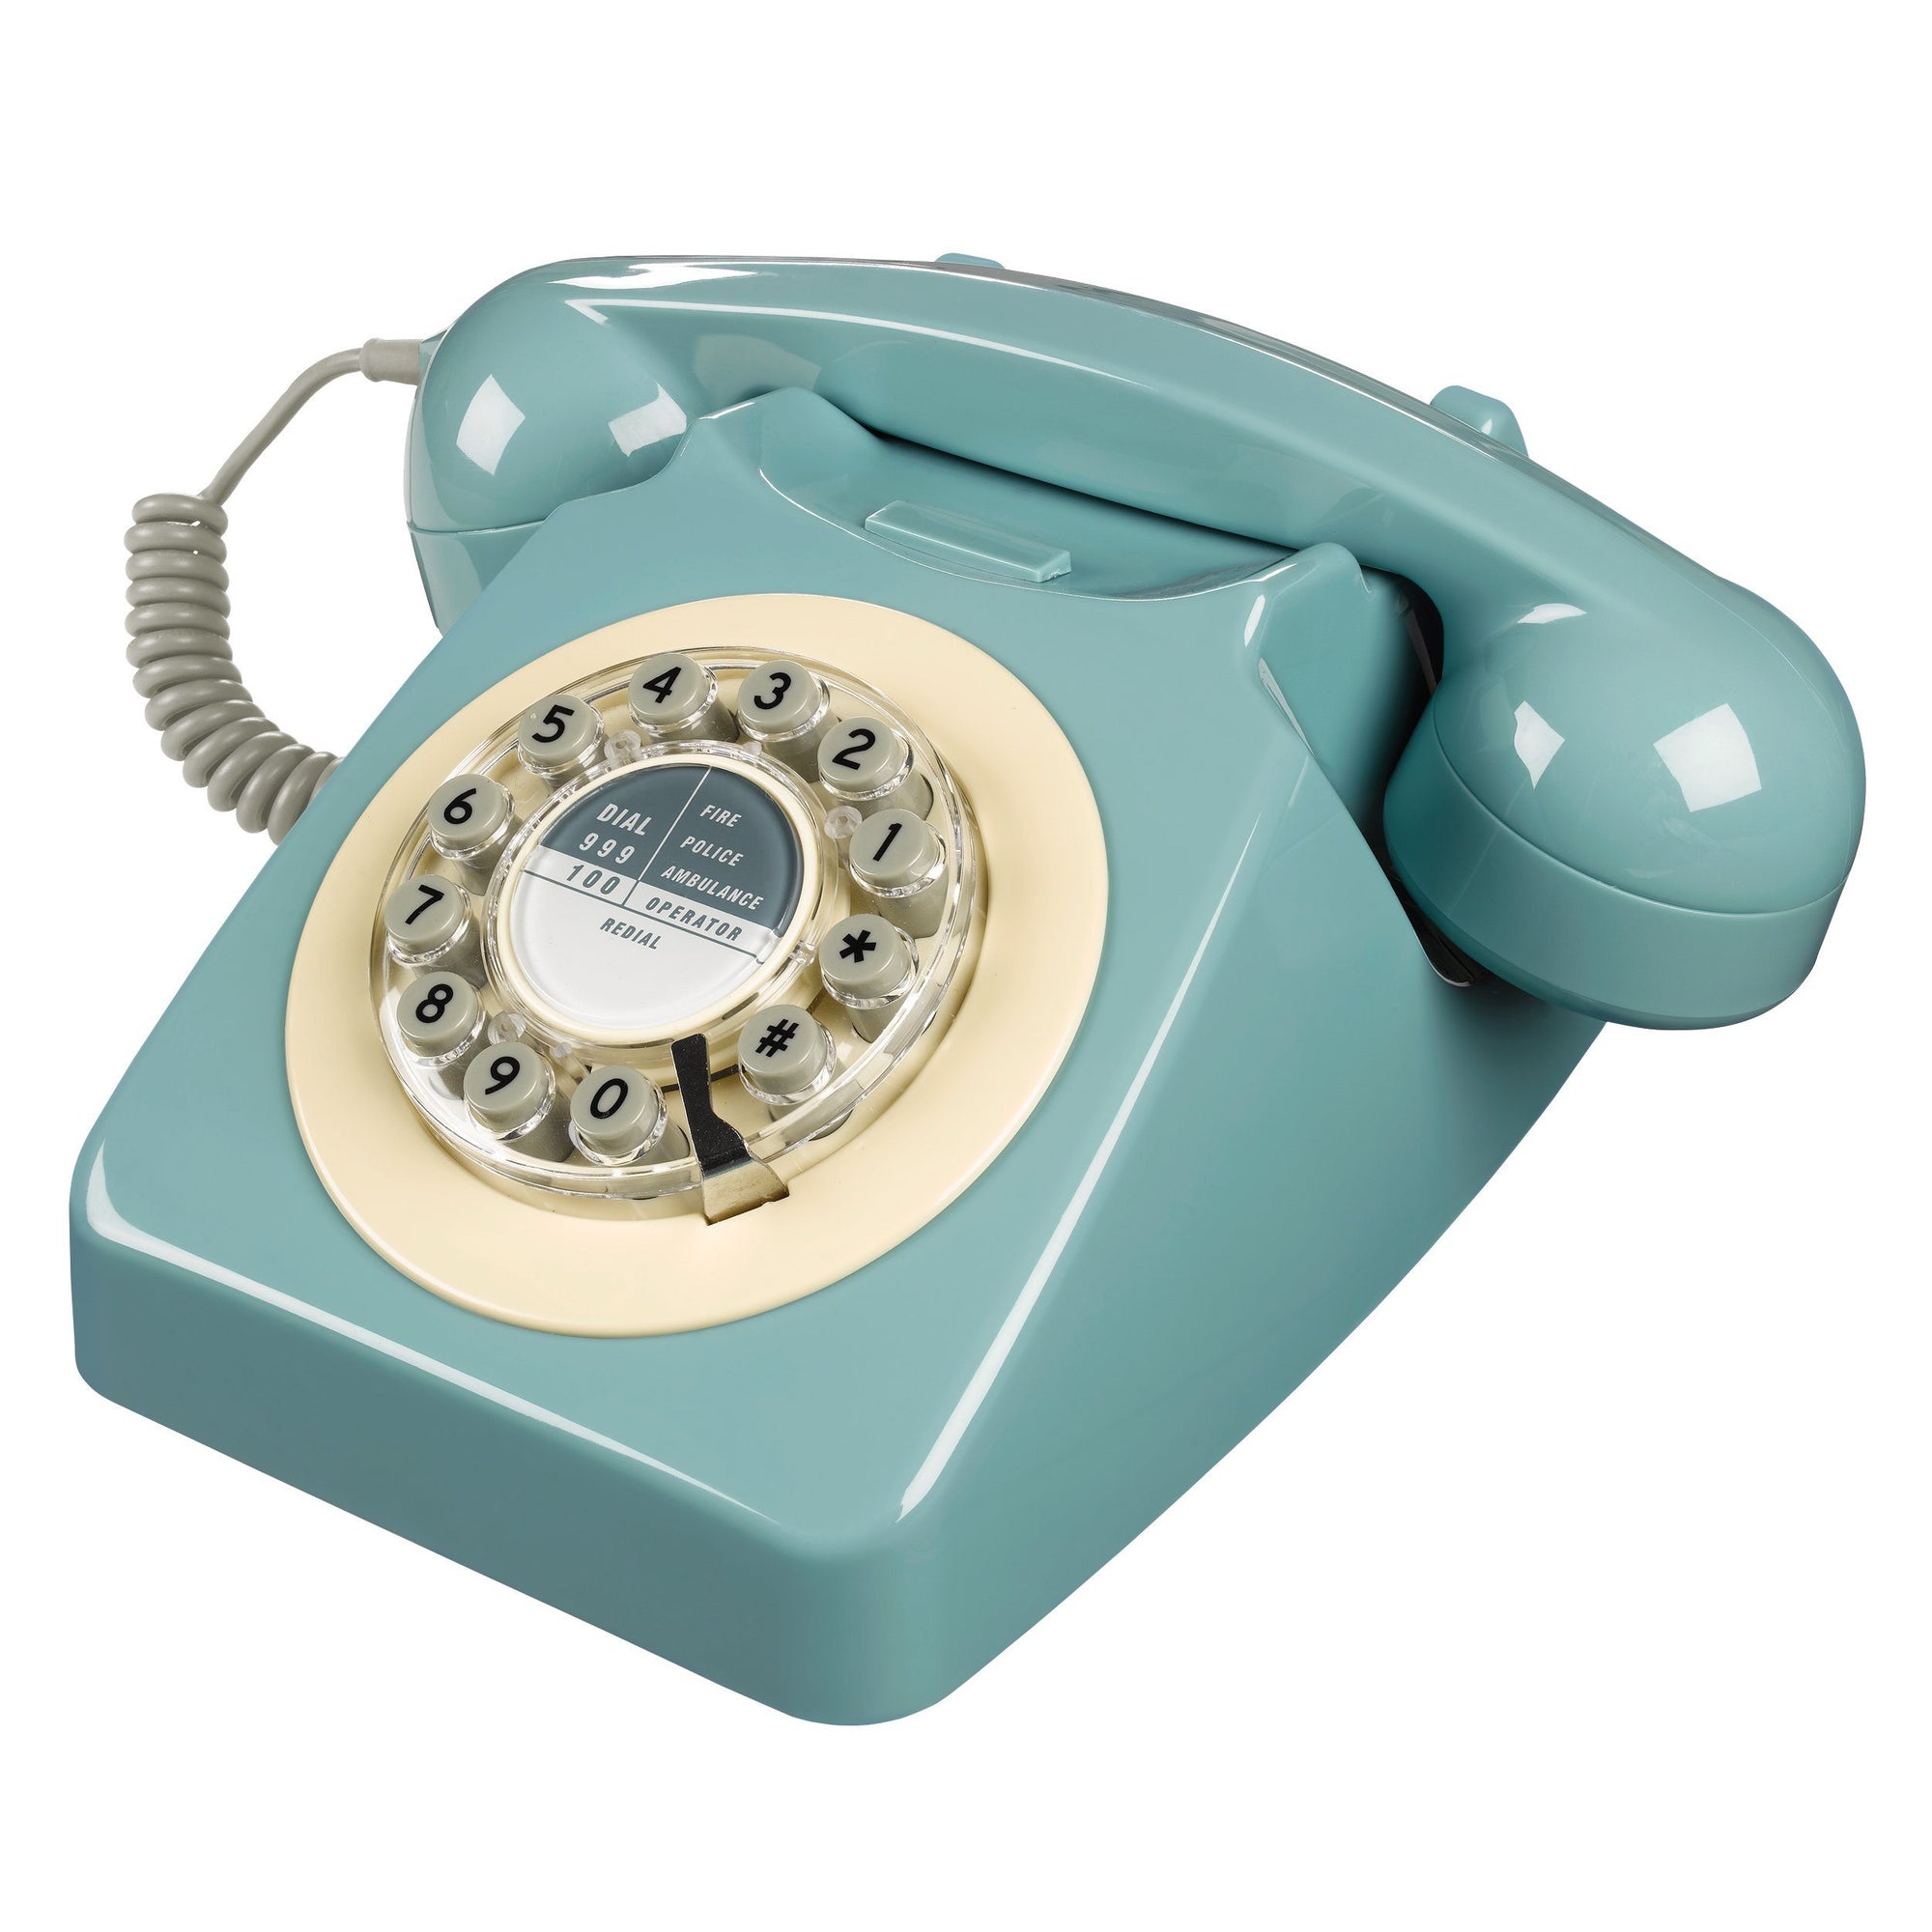 French Blue 746 Telephone Classic 1960's Design - BouChic 